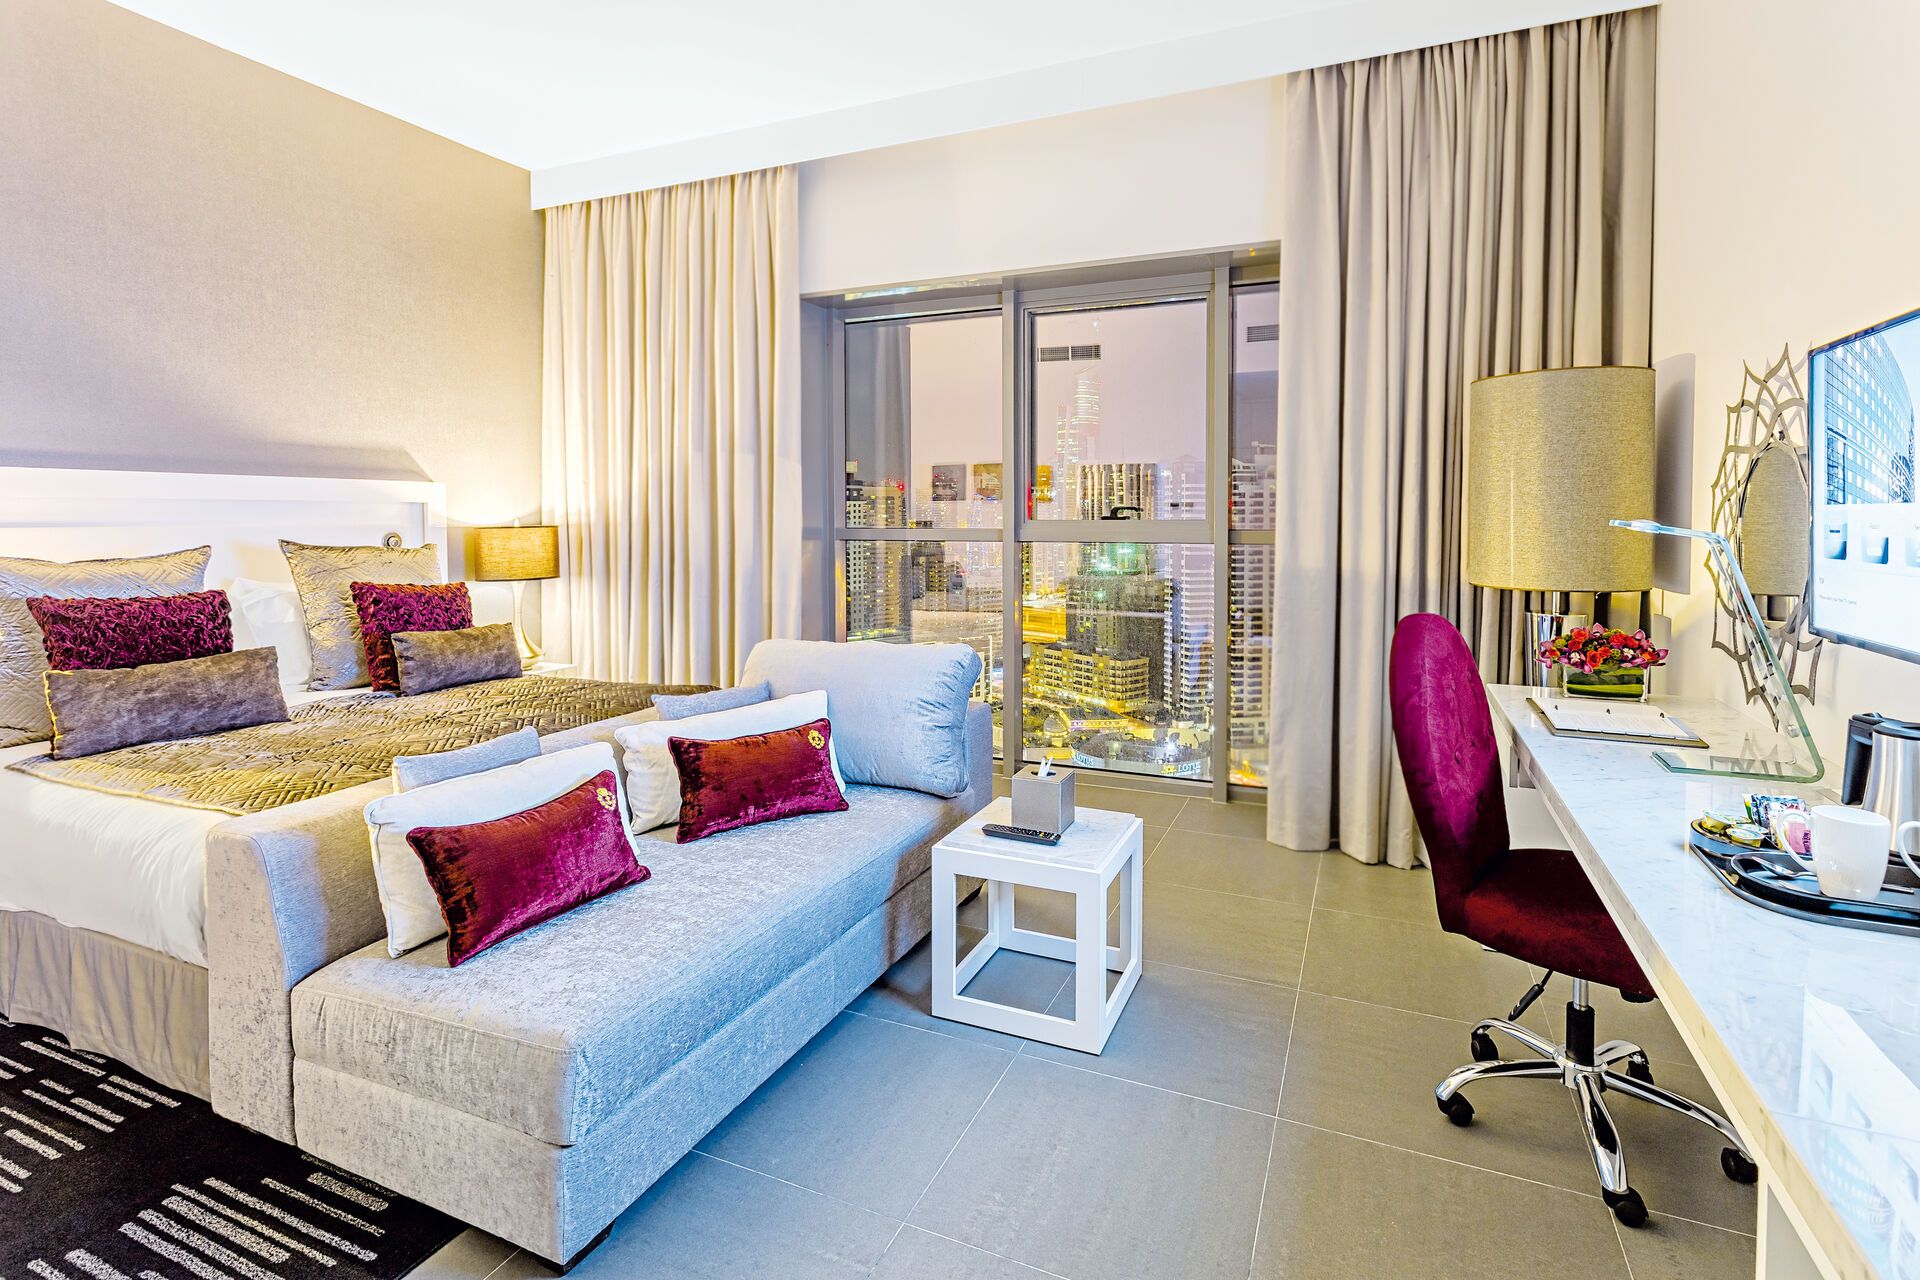 Emirats Arabes Unis - Dubaï - Hôtel Wyndham Dubai Marina 4*